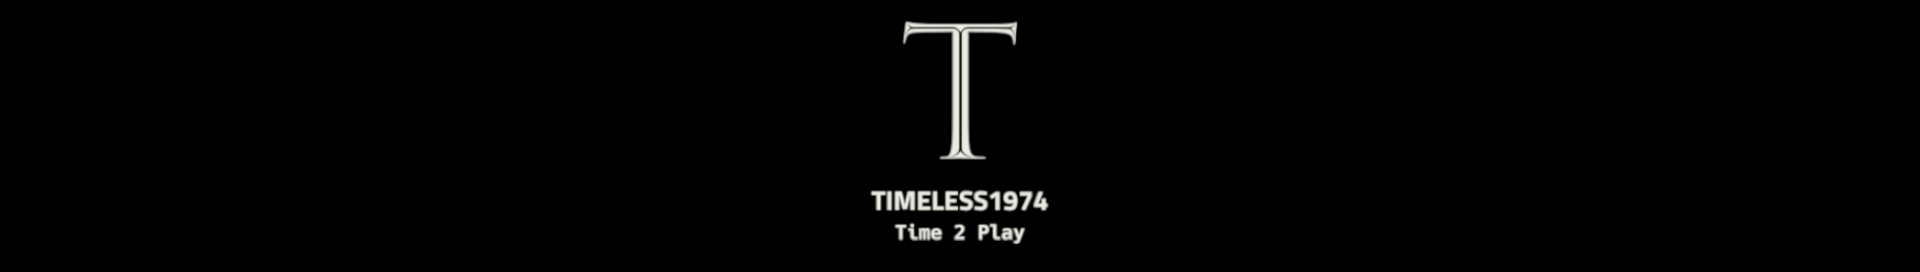 Timeless1974